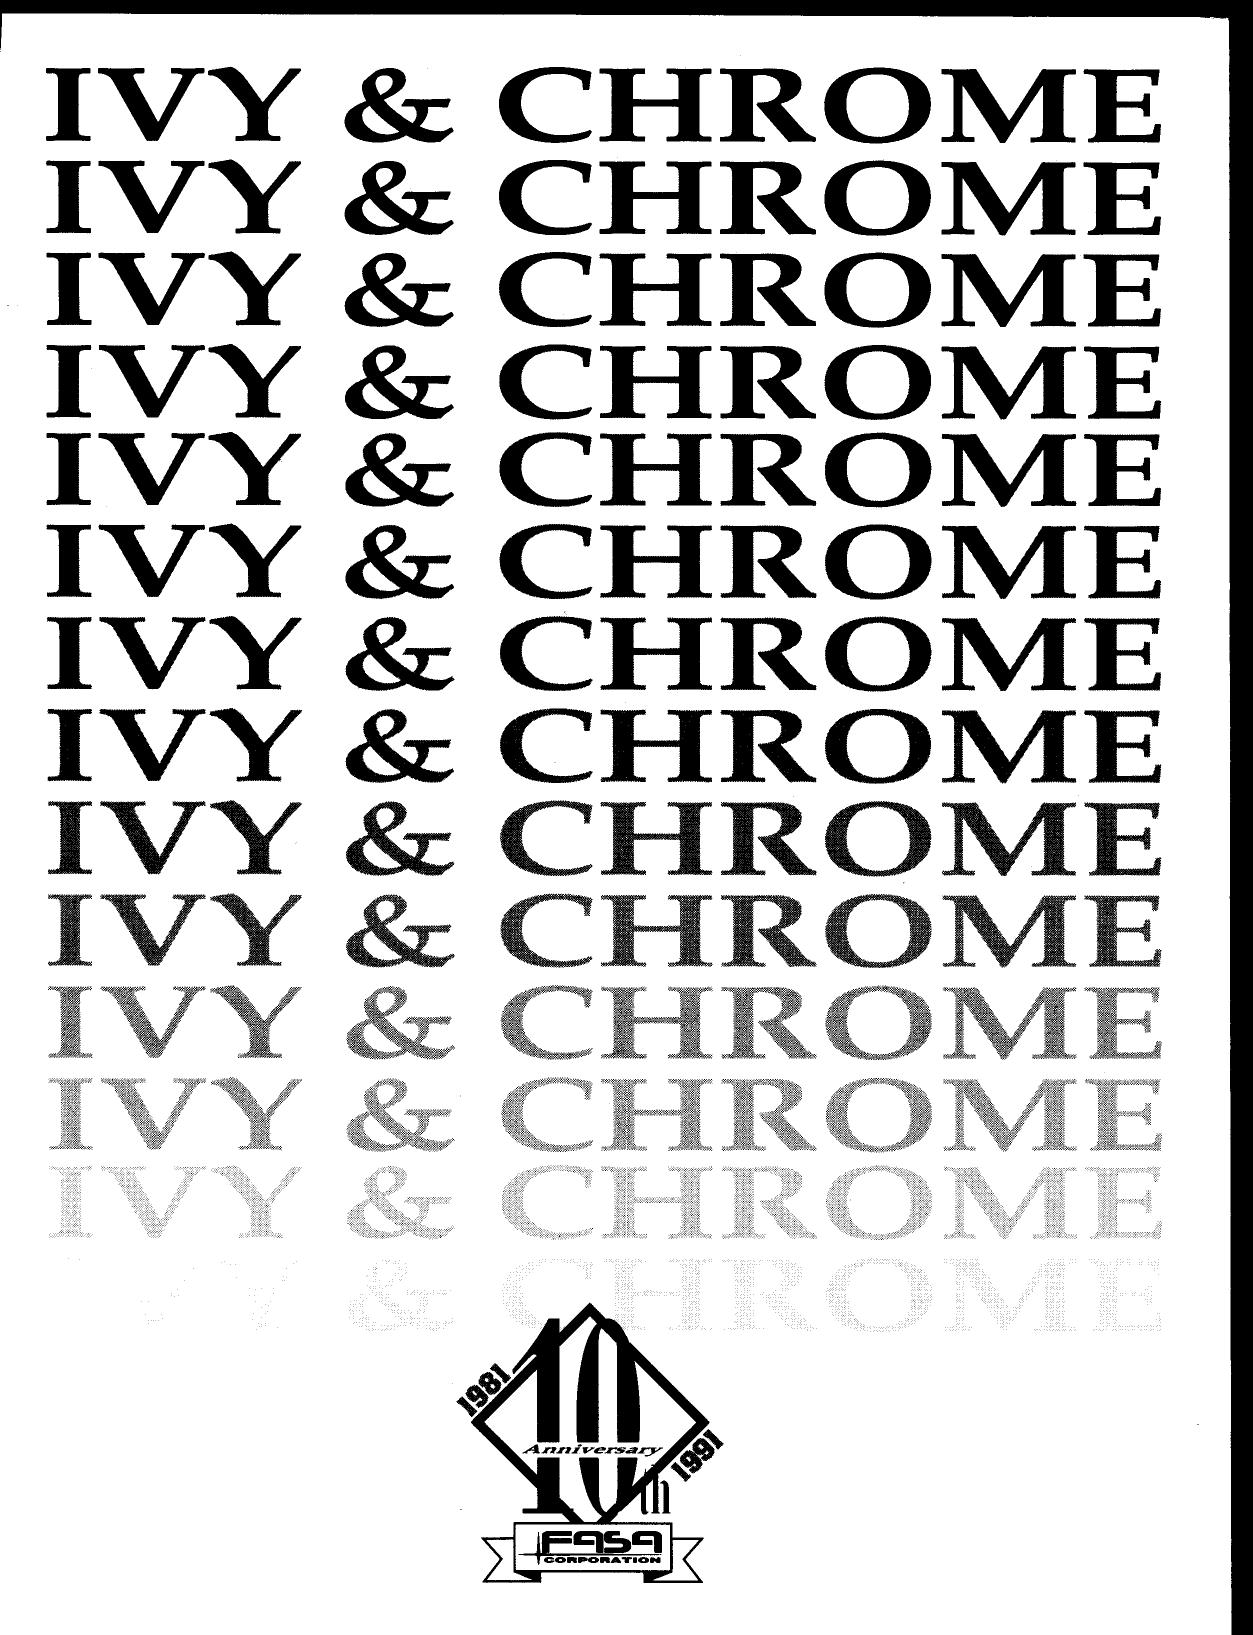 Ivy & Chrome